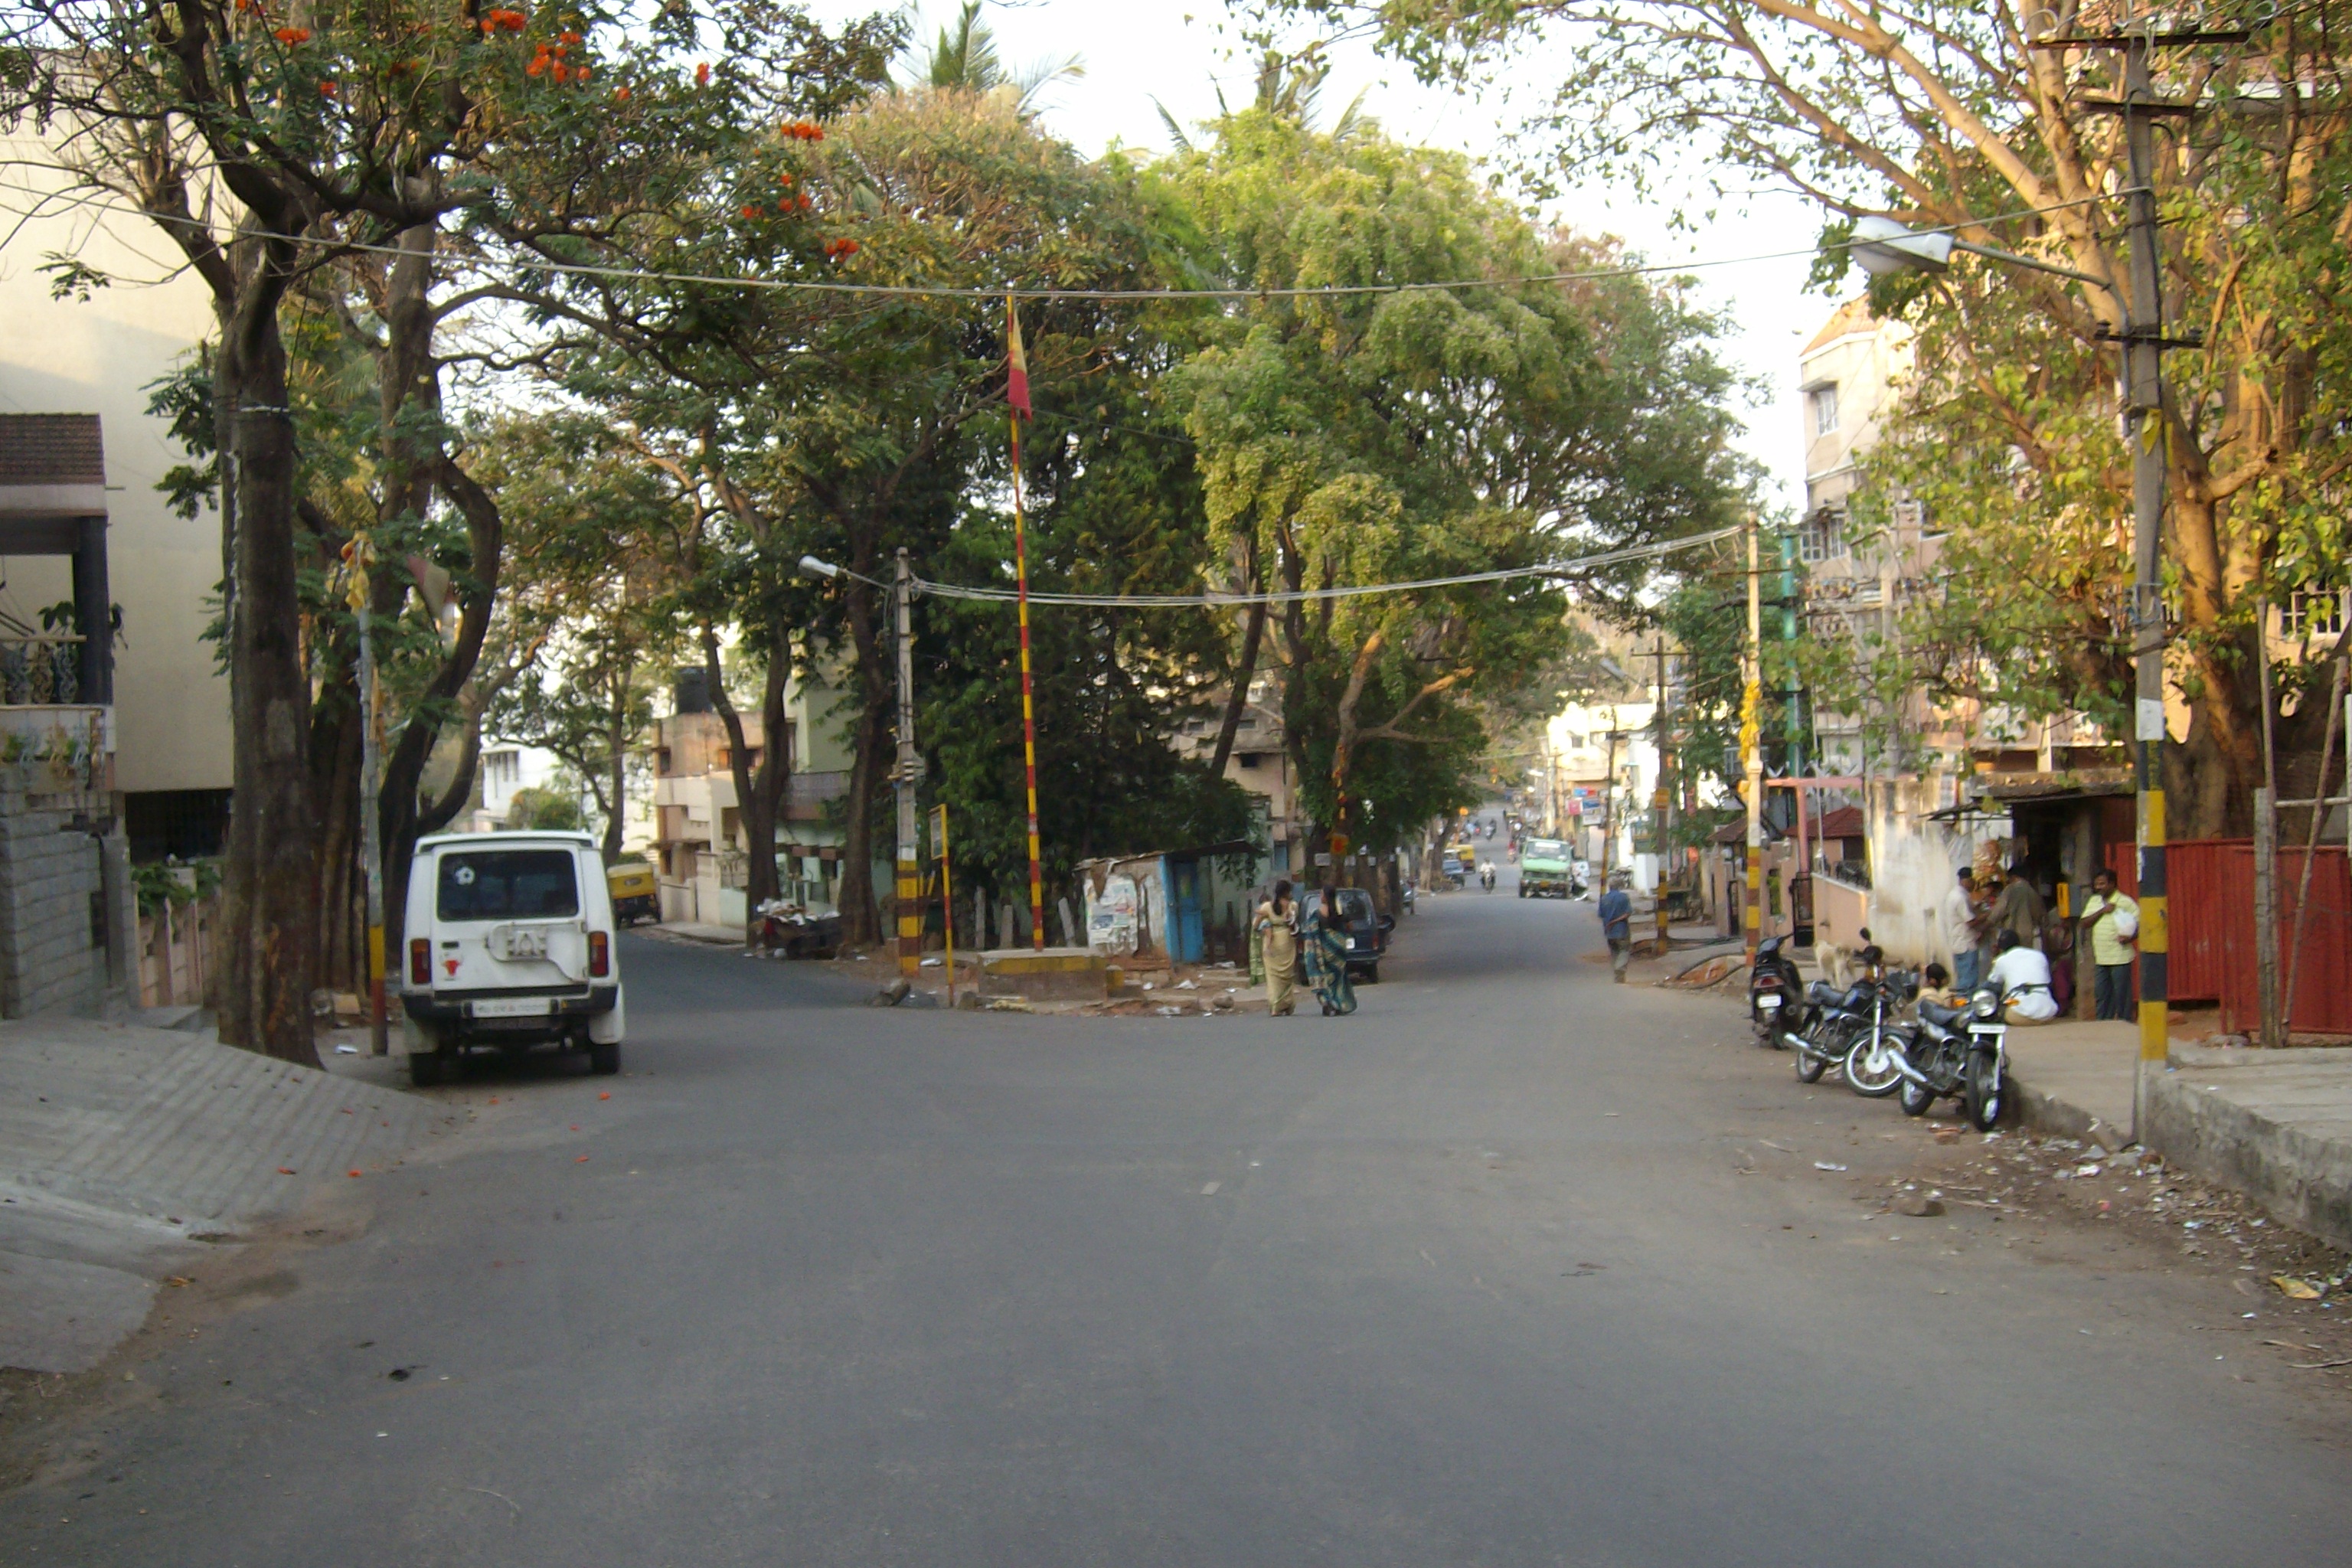 File:LIC Colony, Jayanagar 3rd Block East, Jayanagara Jaya Nagar,  Bengaluru, Karnataka, India - panoramio.jpg - Wikimedia Commons